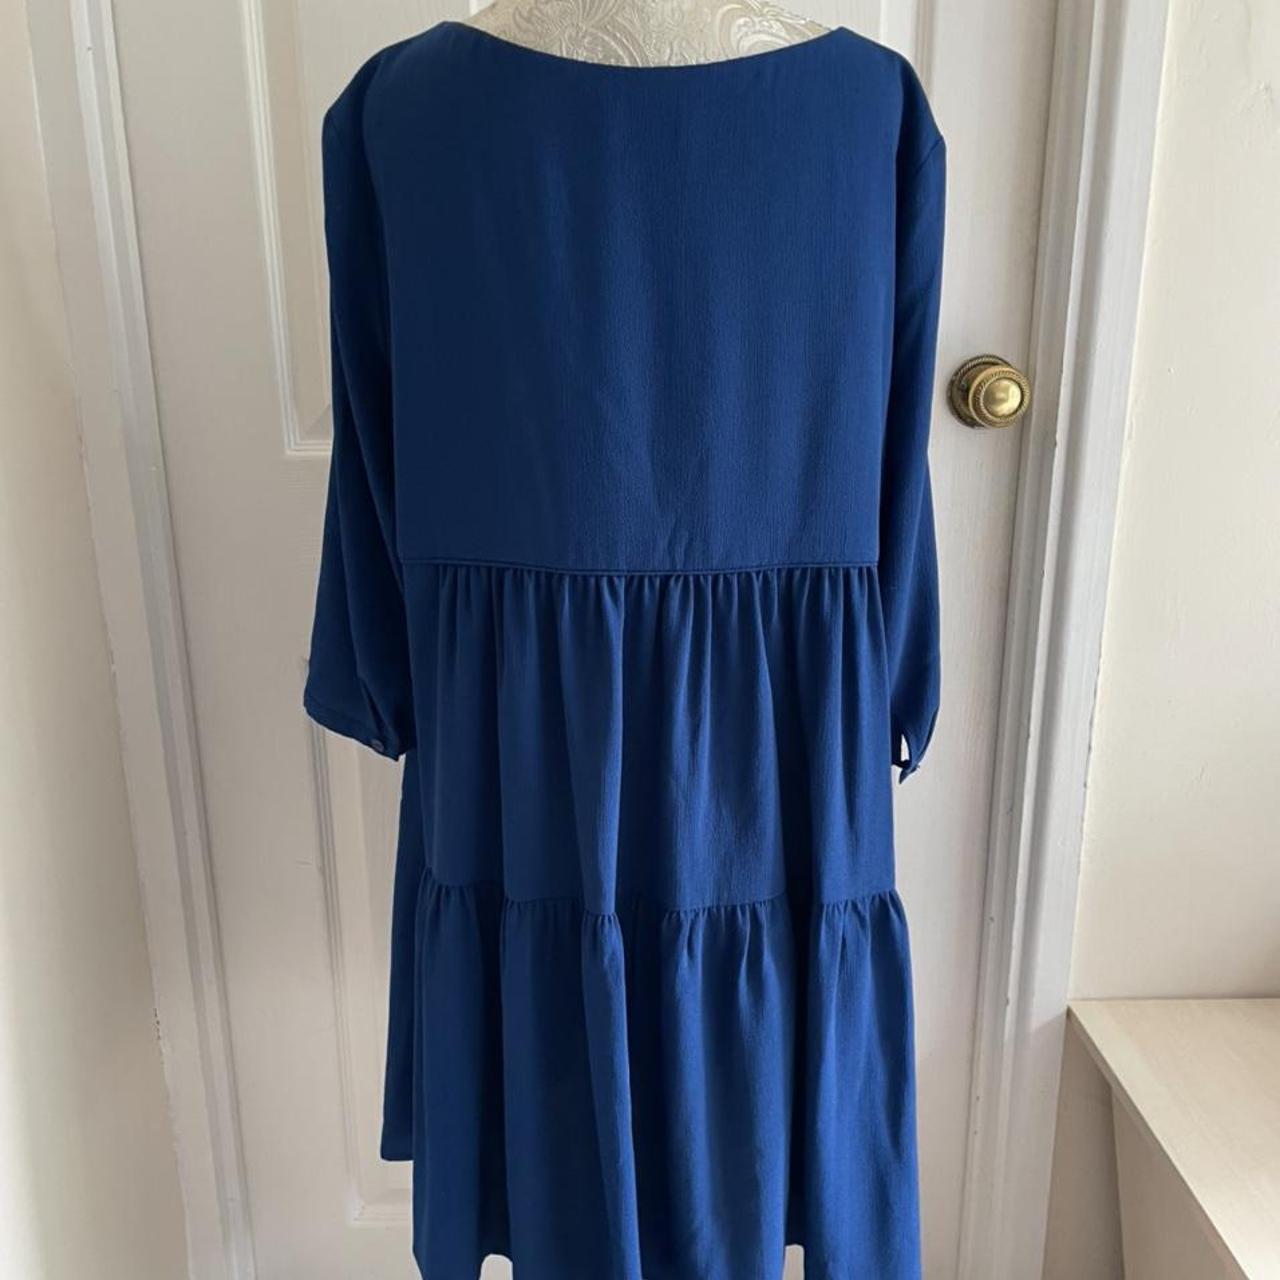 Blue flowy dress with 3/4 length sleeves 97%... - Depop